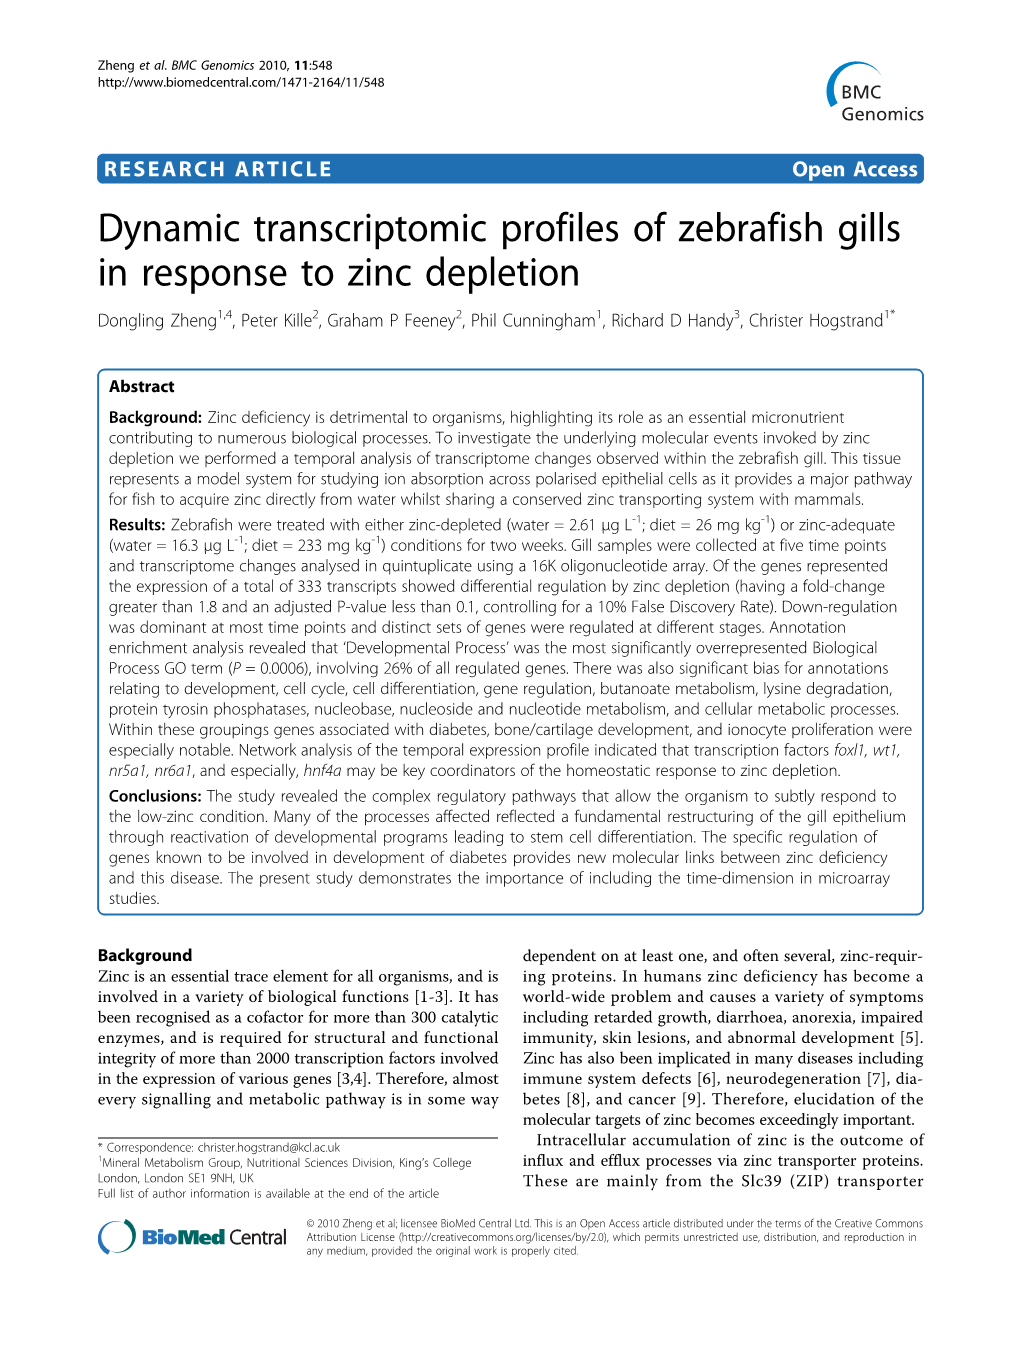 Dynamic Transcriptomic Profiles of Zebrafish Gills in Response to Zinc